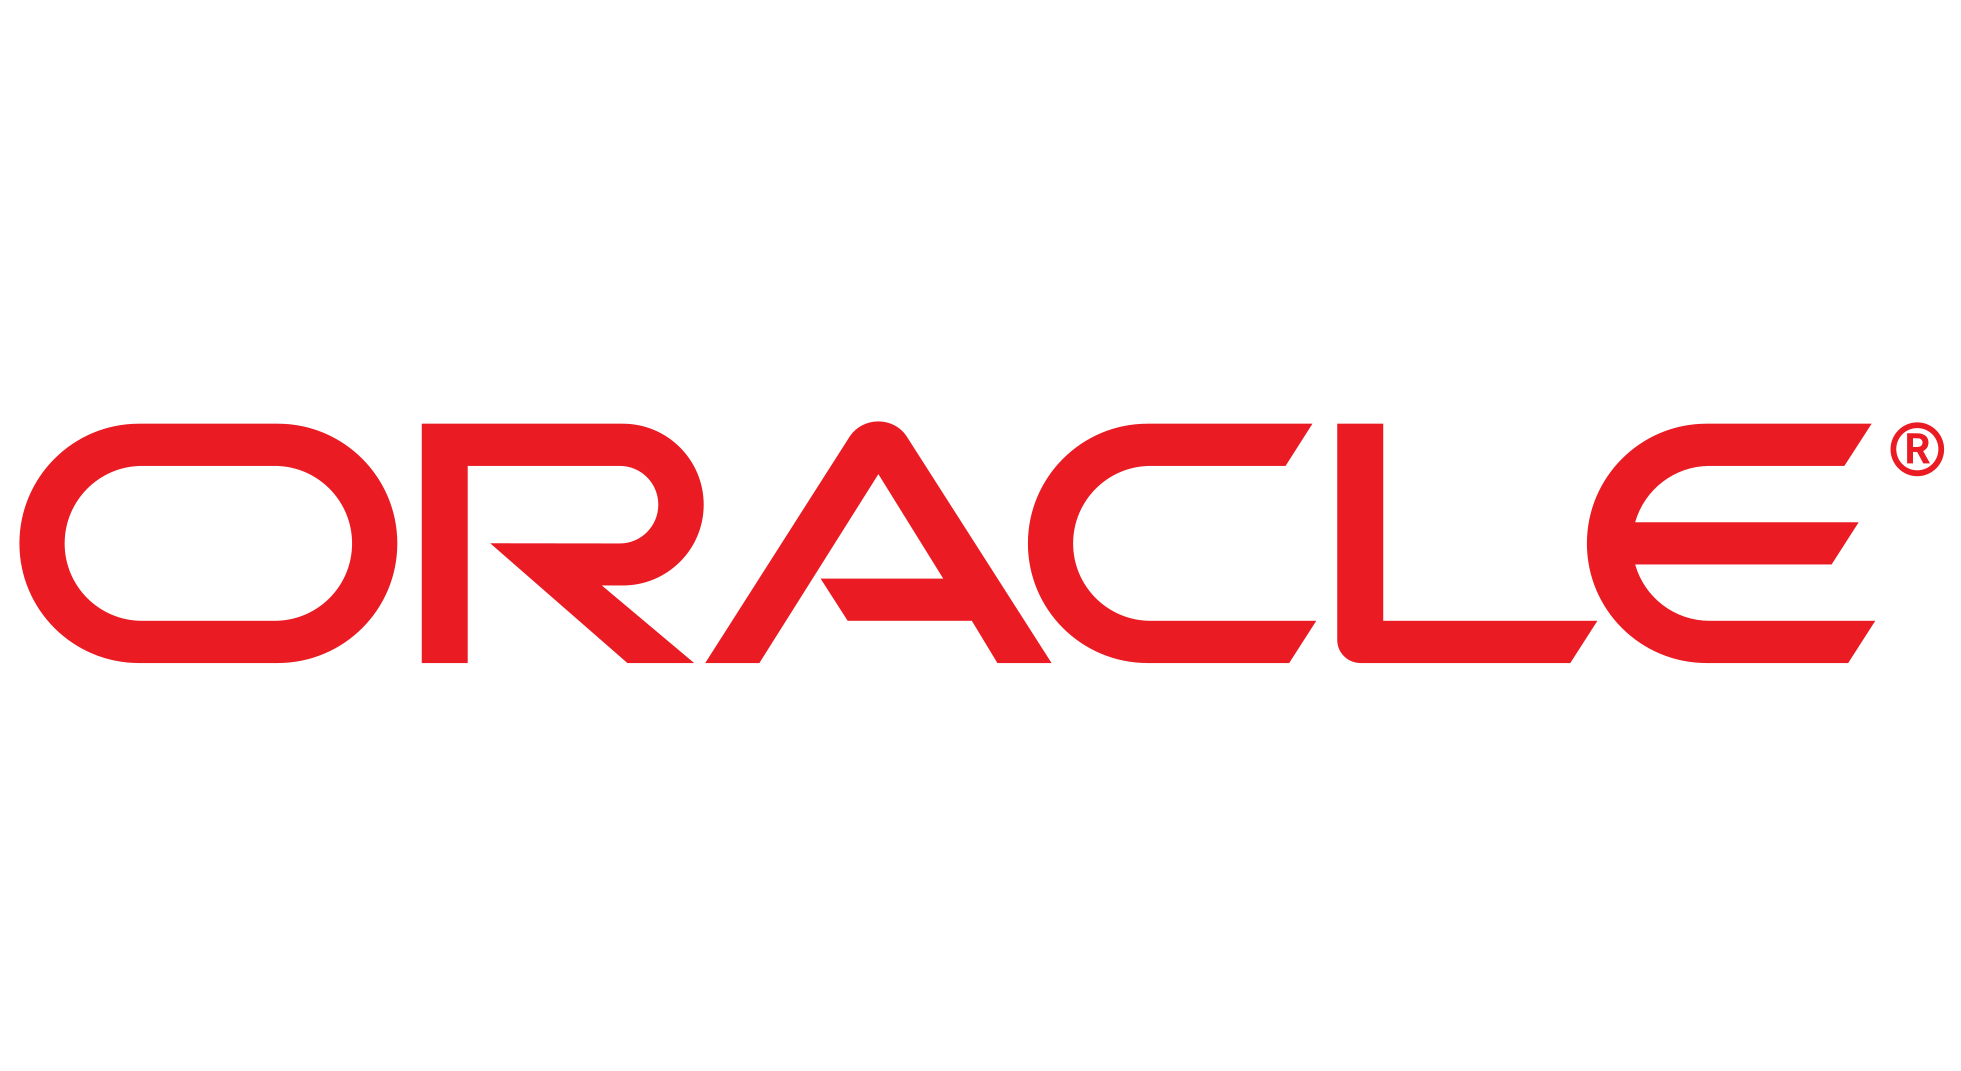 Leading Receptionist(e) Oracle Amsterdam en Utrecht!